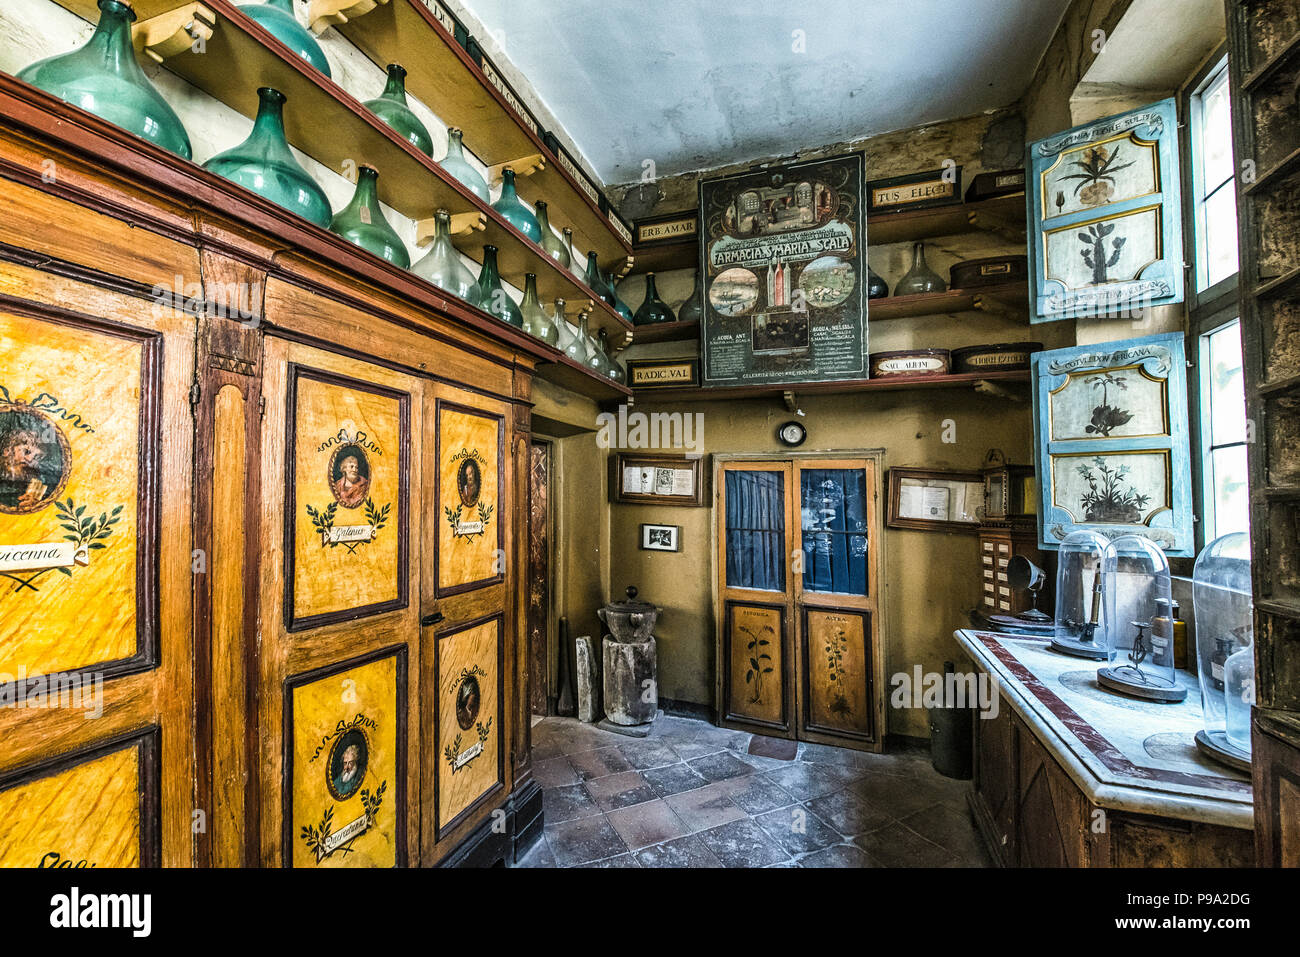 The back room of the main hall of the old Pharmacy and Apothecary 'Farmacia di S. Maria della Scala' in Piazza della Scala in Trastevere quarter, Rome, Italy Stock Photo